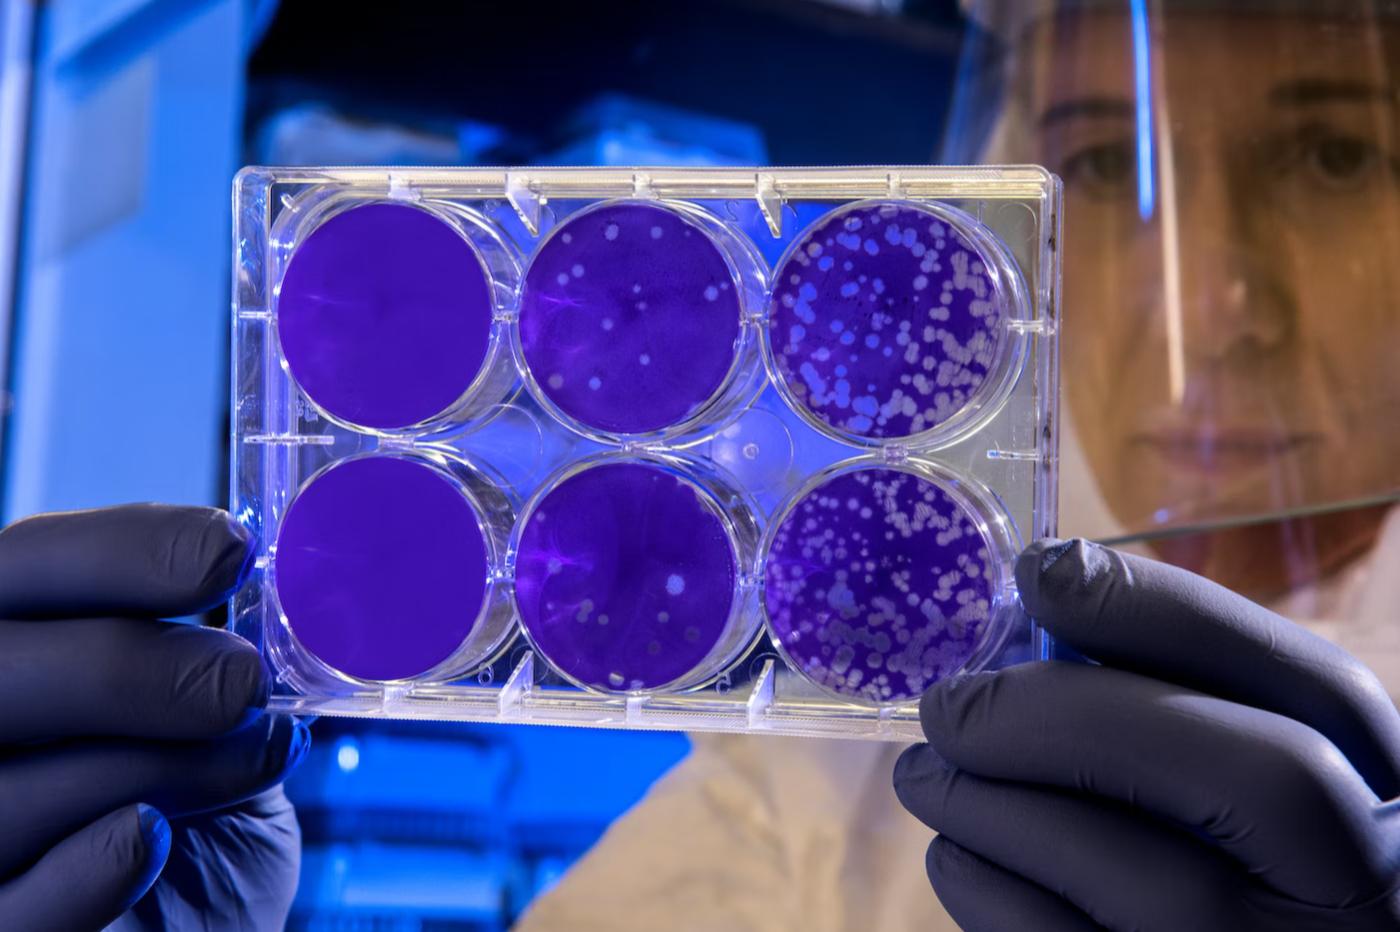 un chercheur observe des cultures de microorganismes dans des boîtes de petri